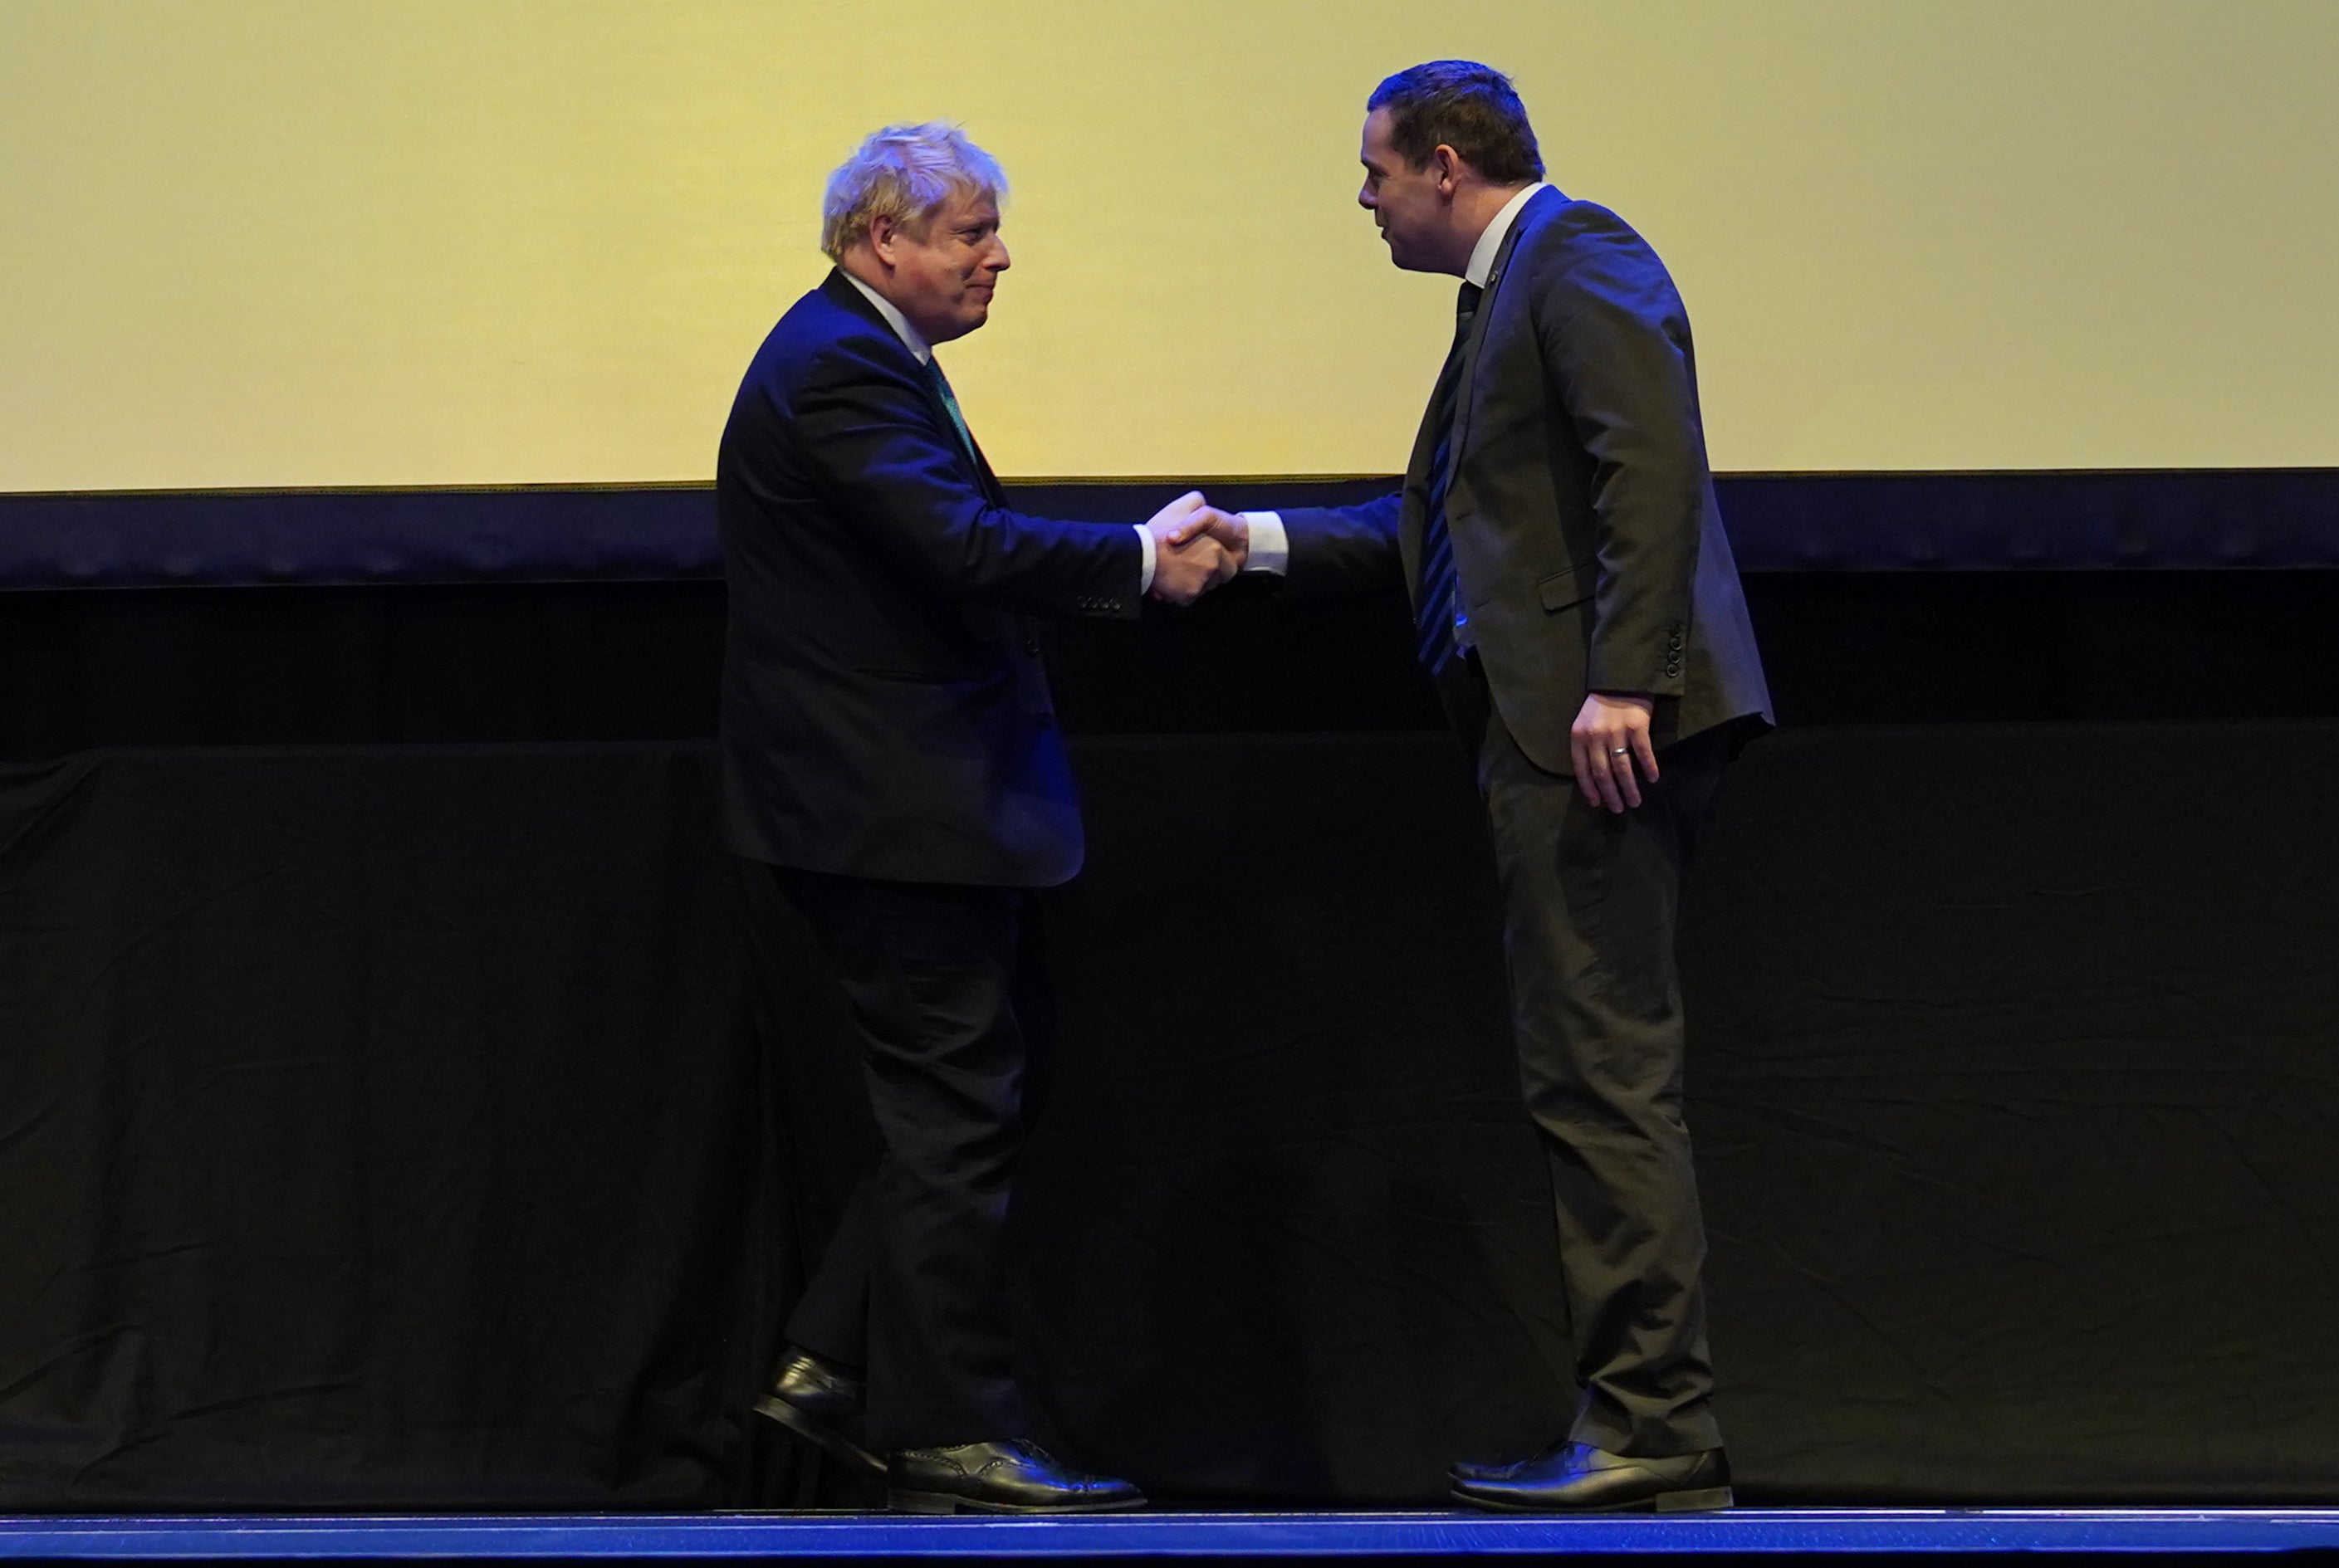 Johnson (left) and Ross (right) shake hands